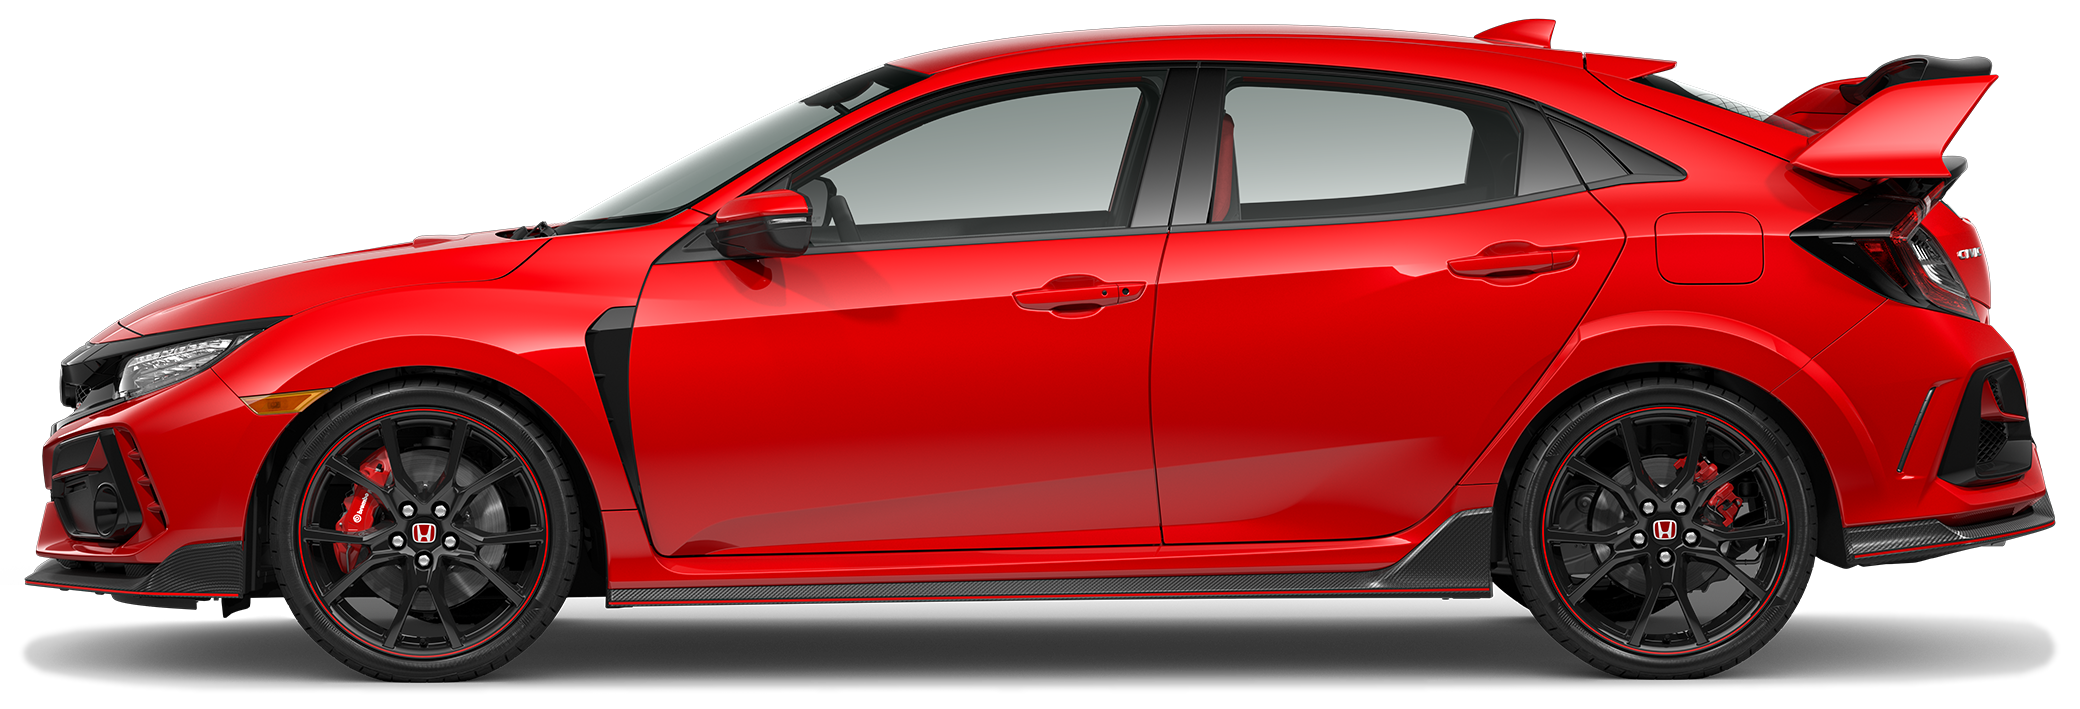 2021 Honda Civic Type R Hatchback Touring 